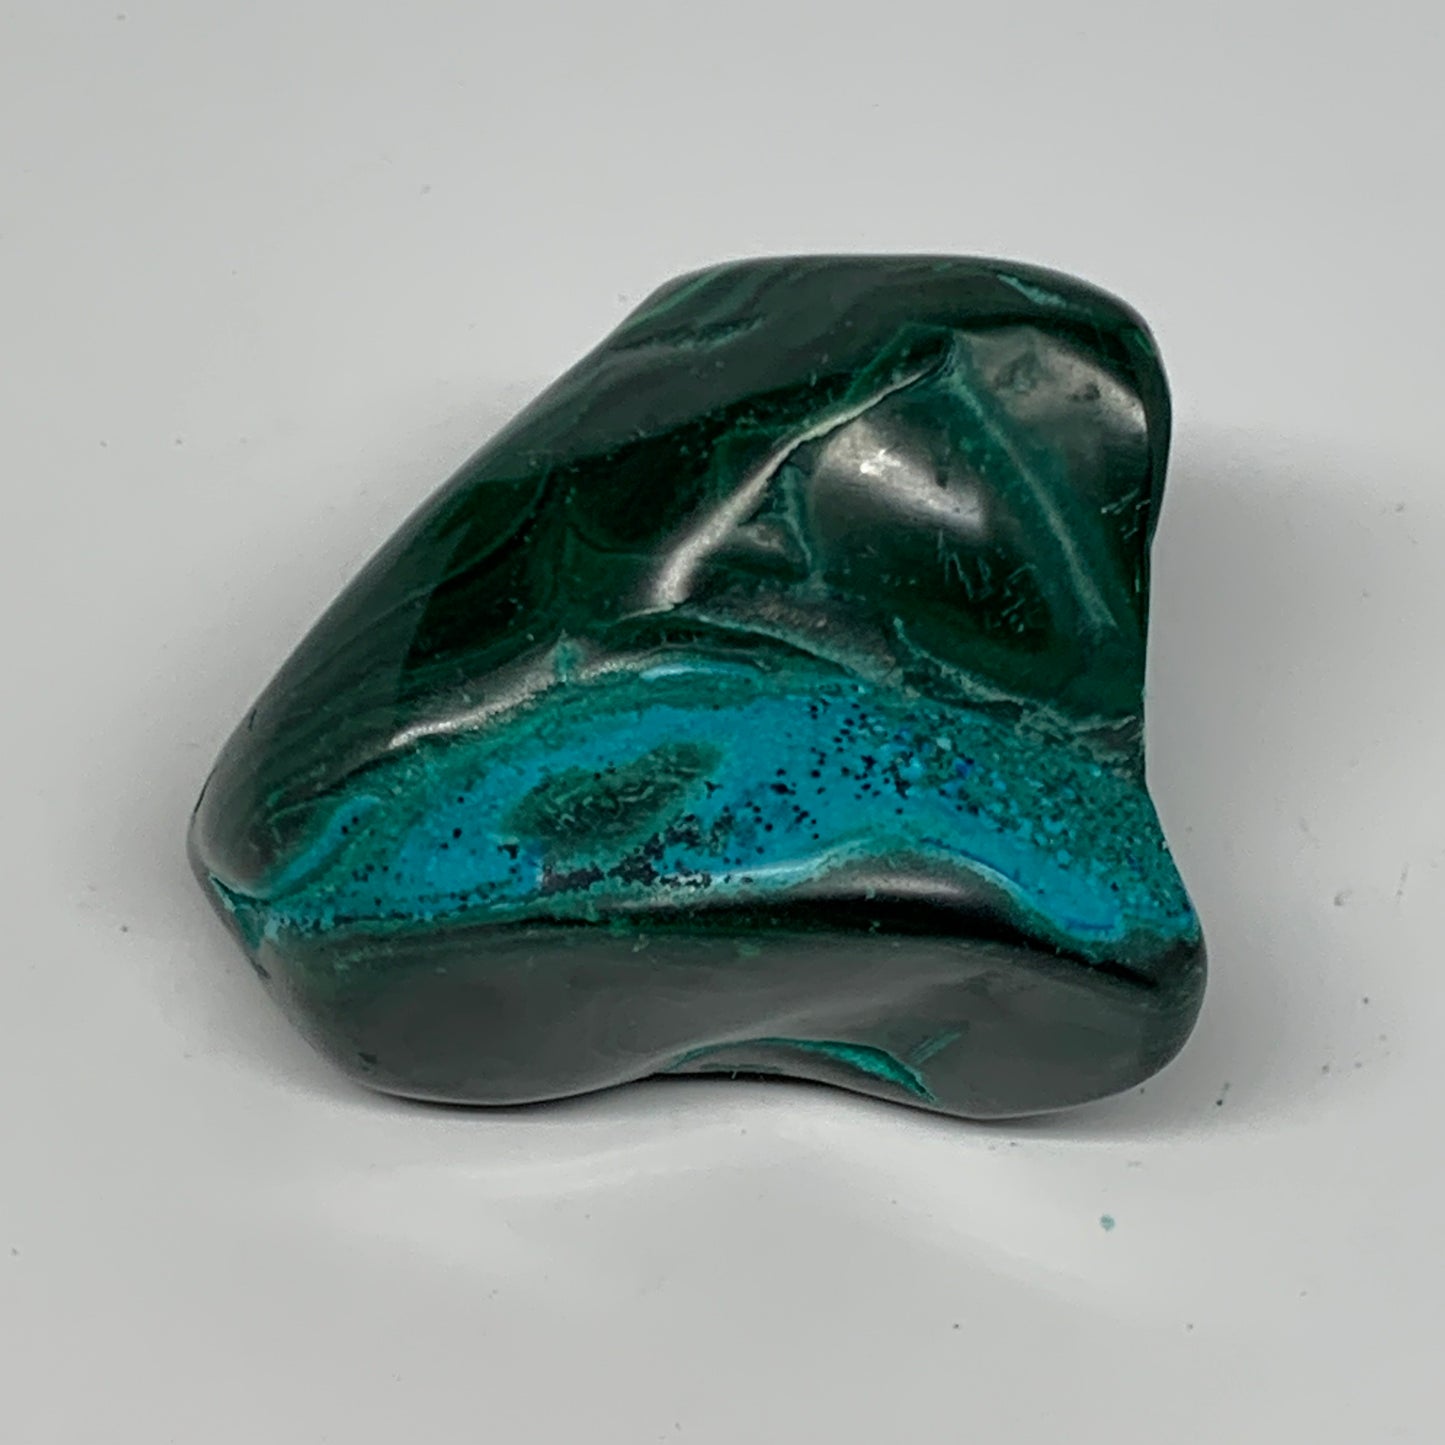 192.8g,2.5"x2"x1.5" Natural Azurite Malachite Freeform Polished @Congo, B18539